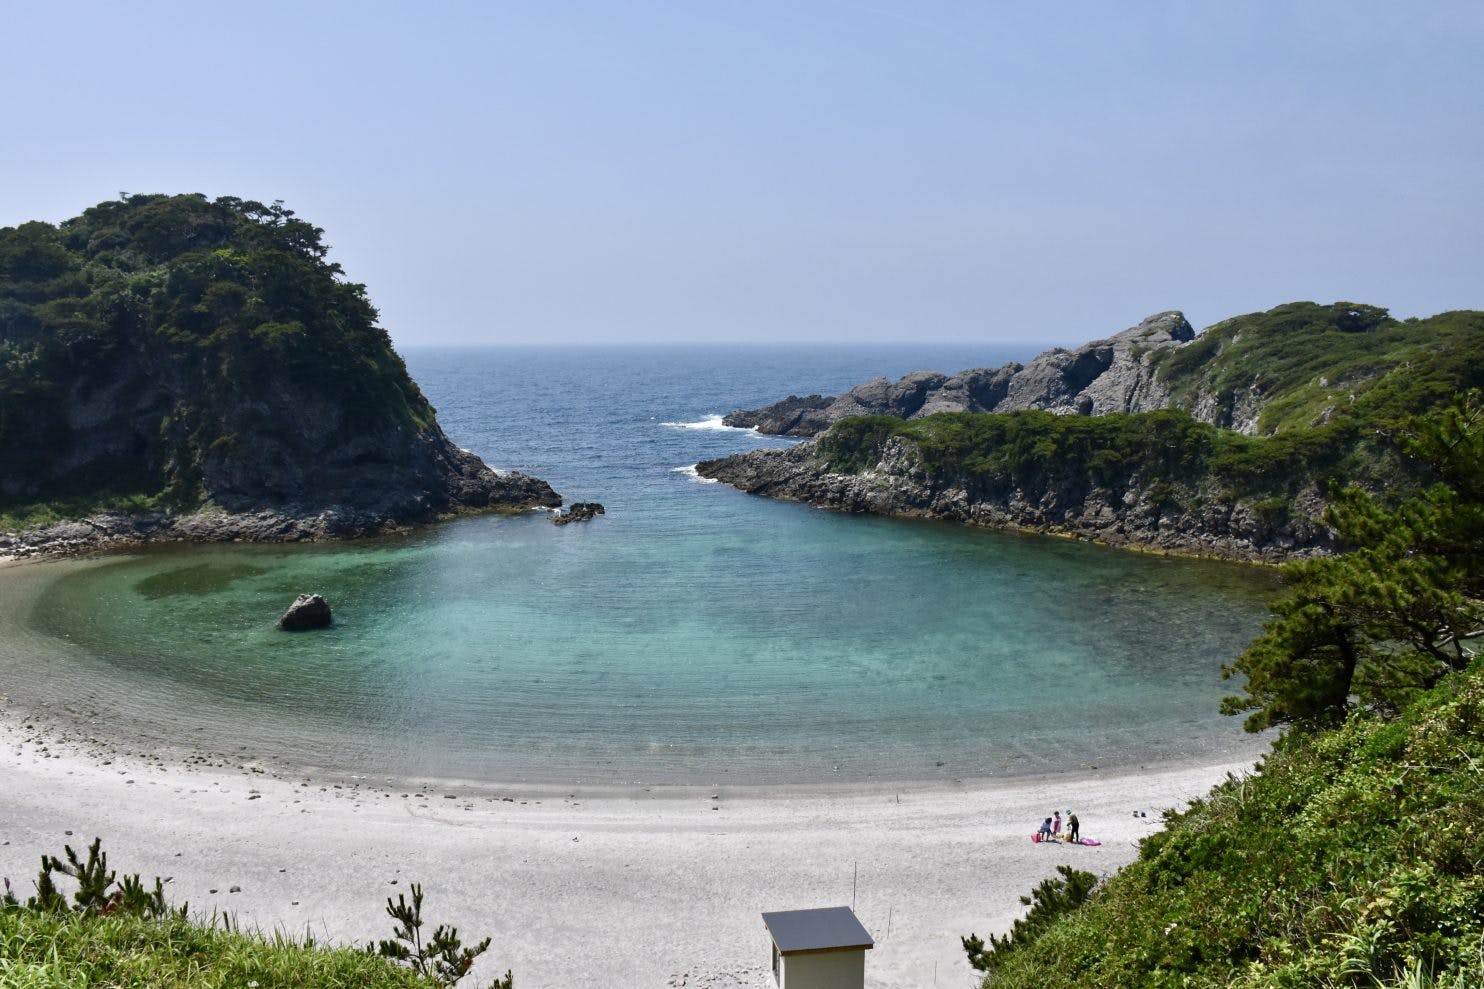 tomari beach, shikinejima, tokyoislands, izuislands, tokyo, japan